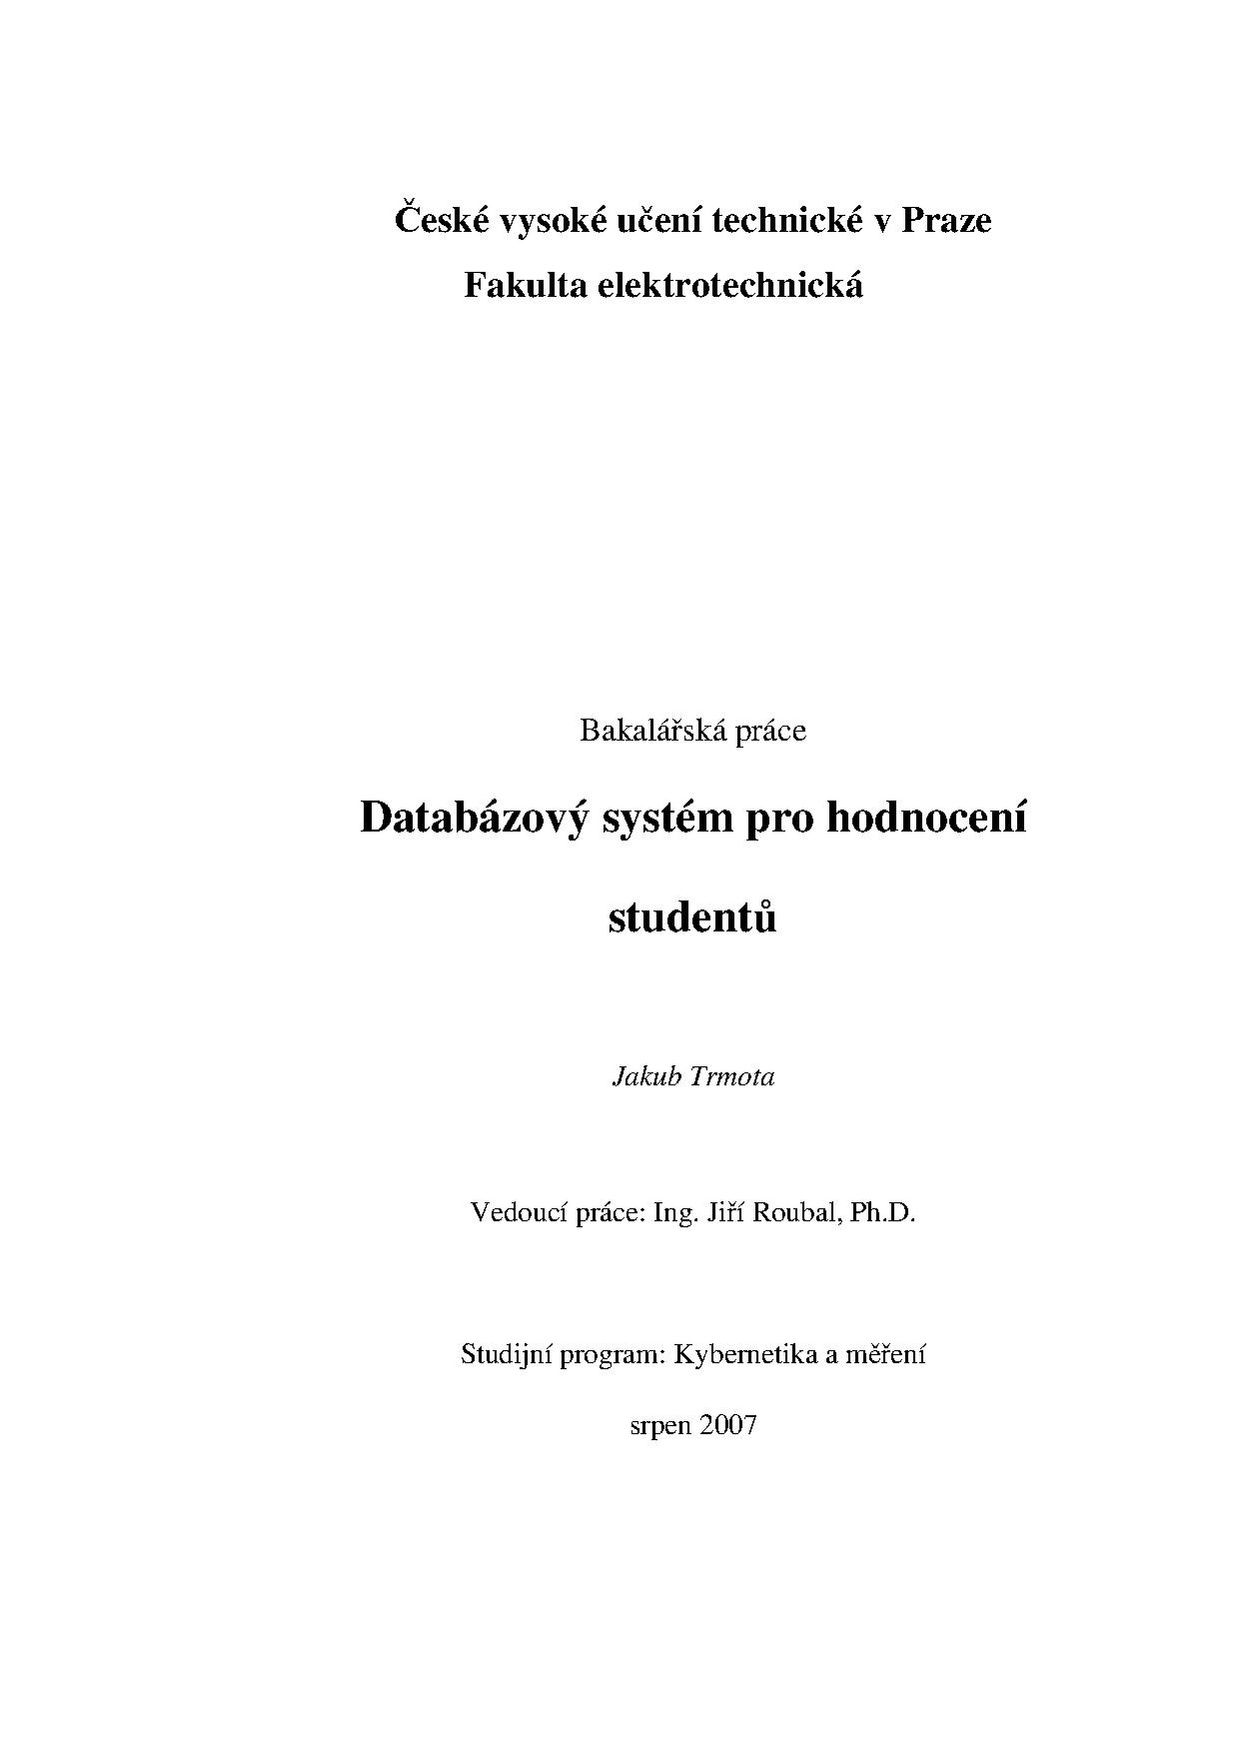 Bp 2007 trmota jakub.pdf